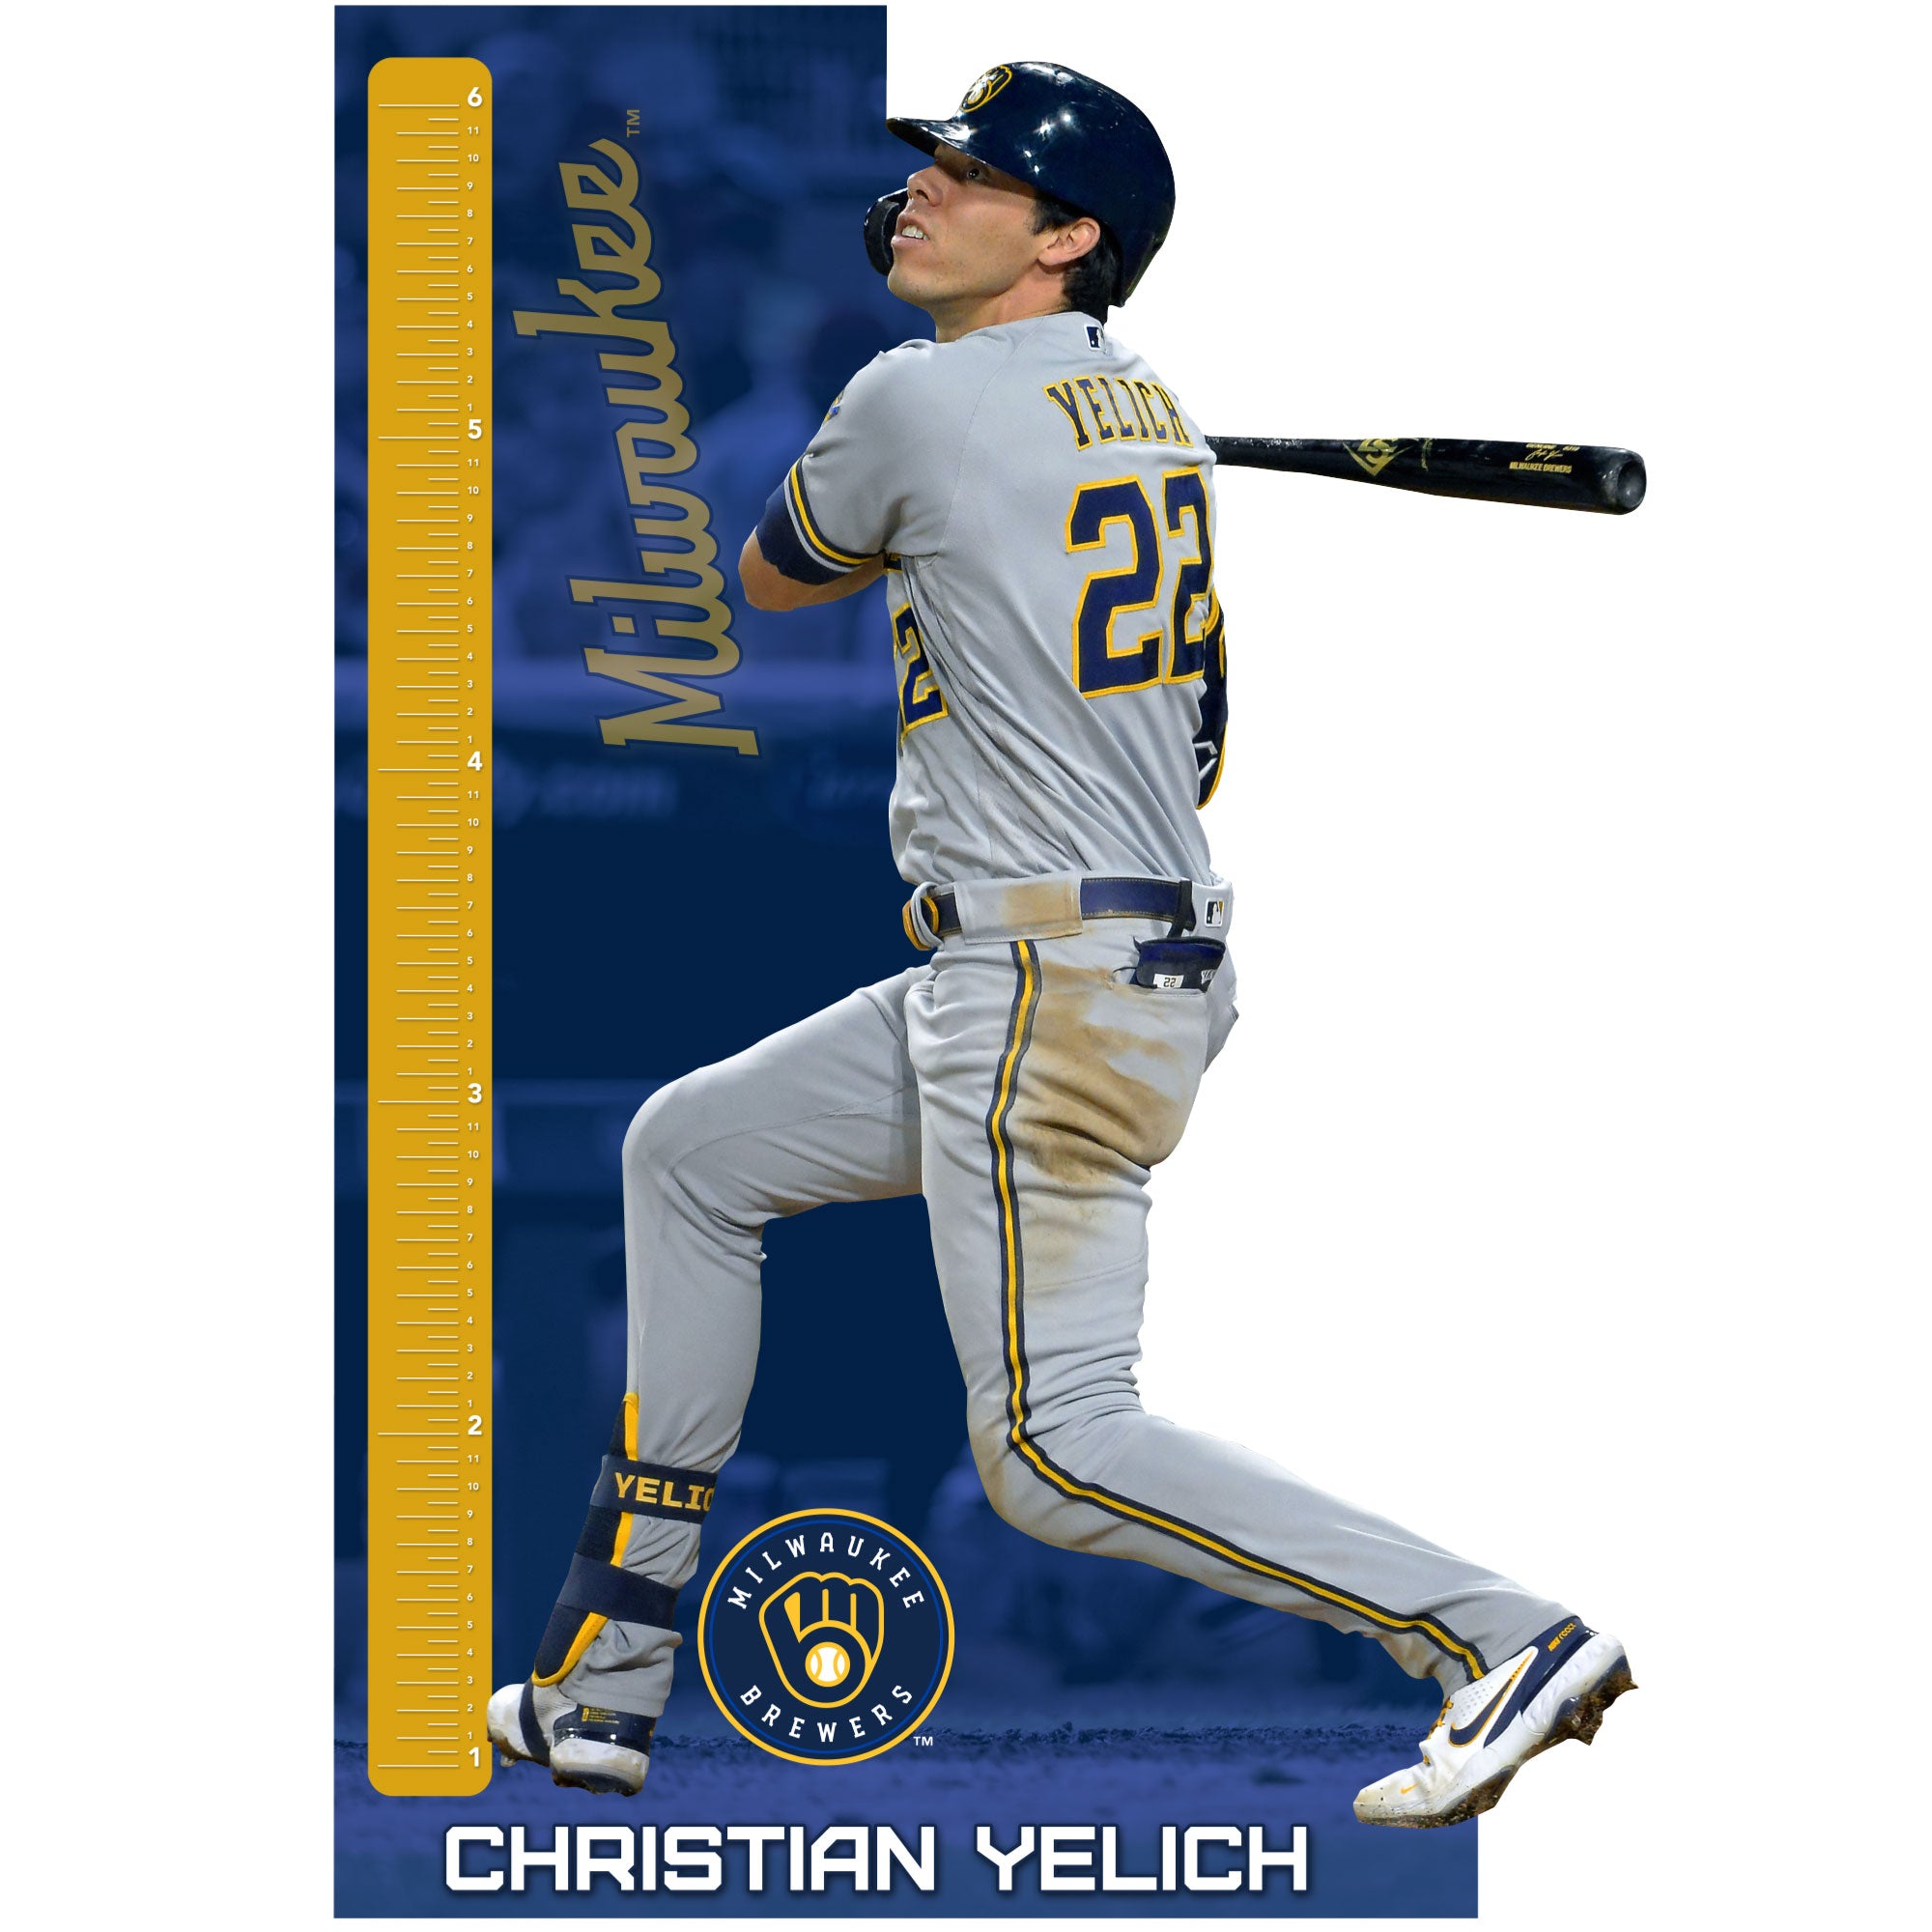 Christian Yelich Baseball Player Printed Illustration Card / 